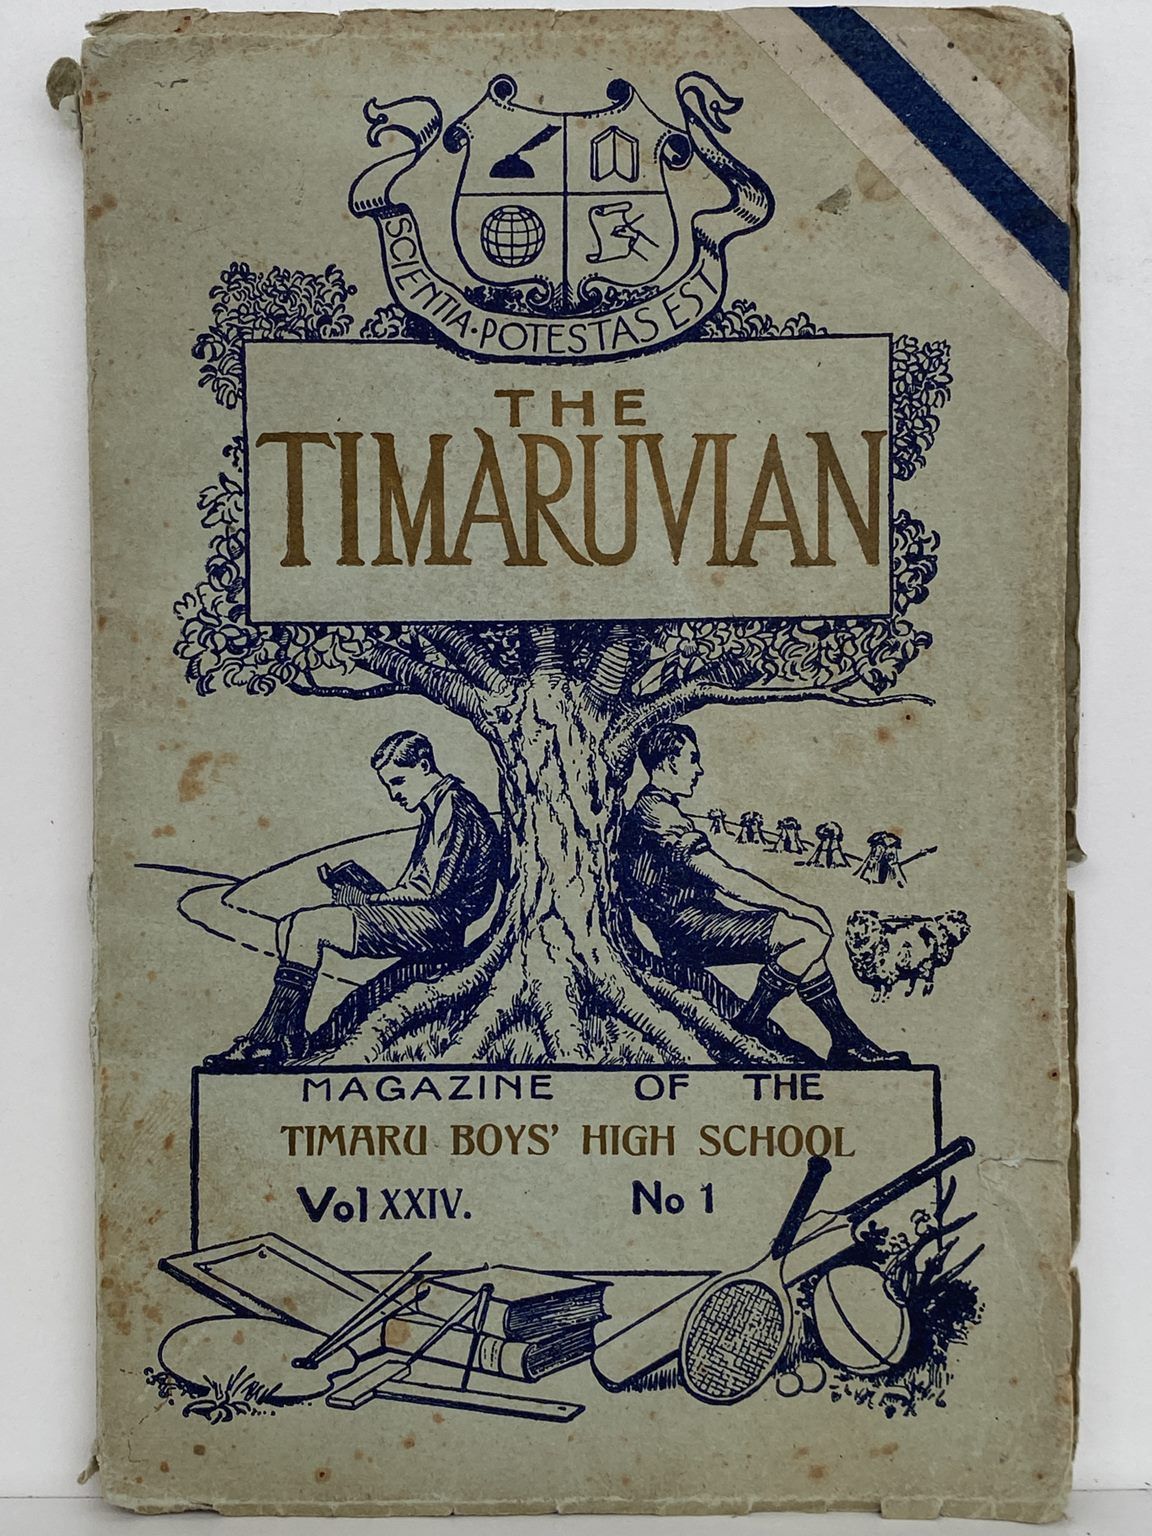 THE TIMARUVIAN: Magazine of the Timaru Boys' High School - March 1930